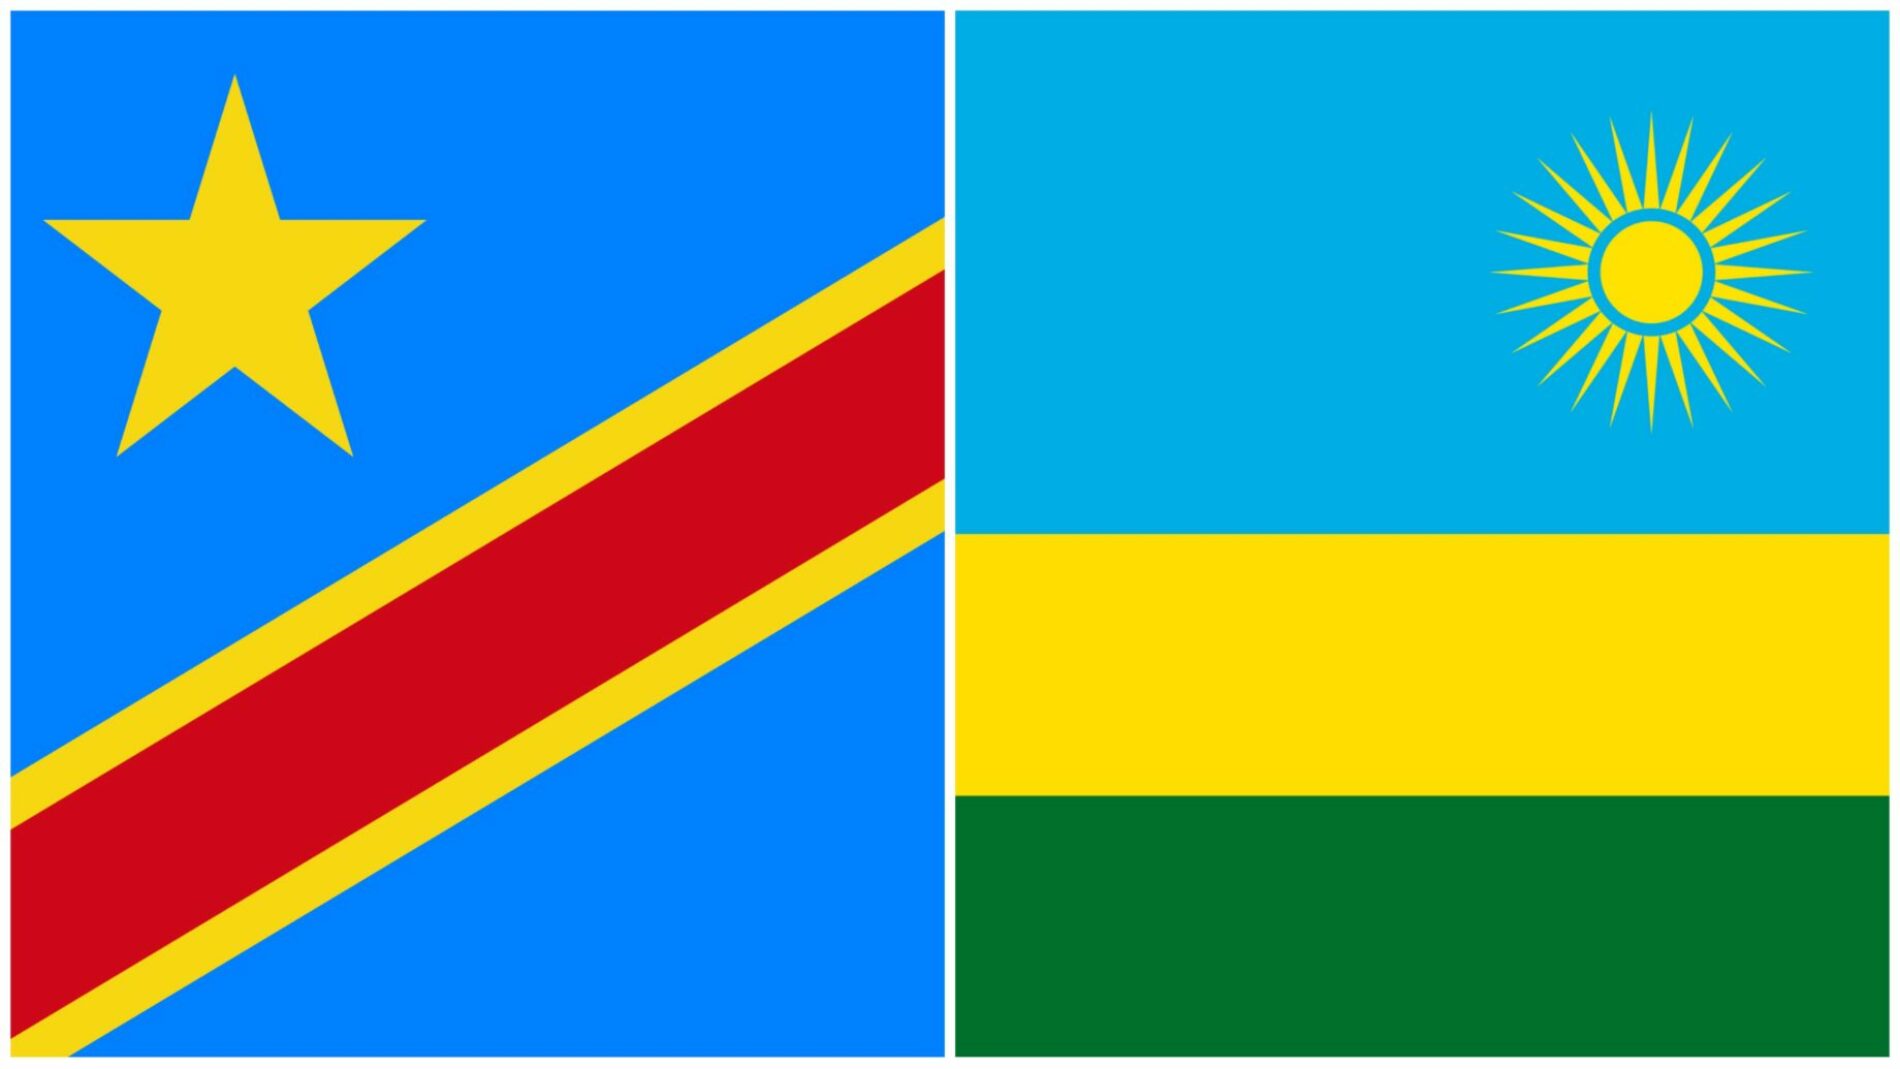 Rwanda-DRC: DRC once again accuses Rwanda of supporting the M23 (press release)